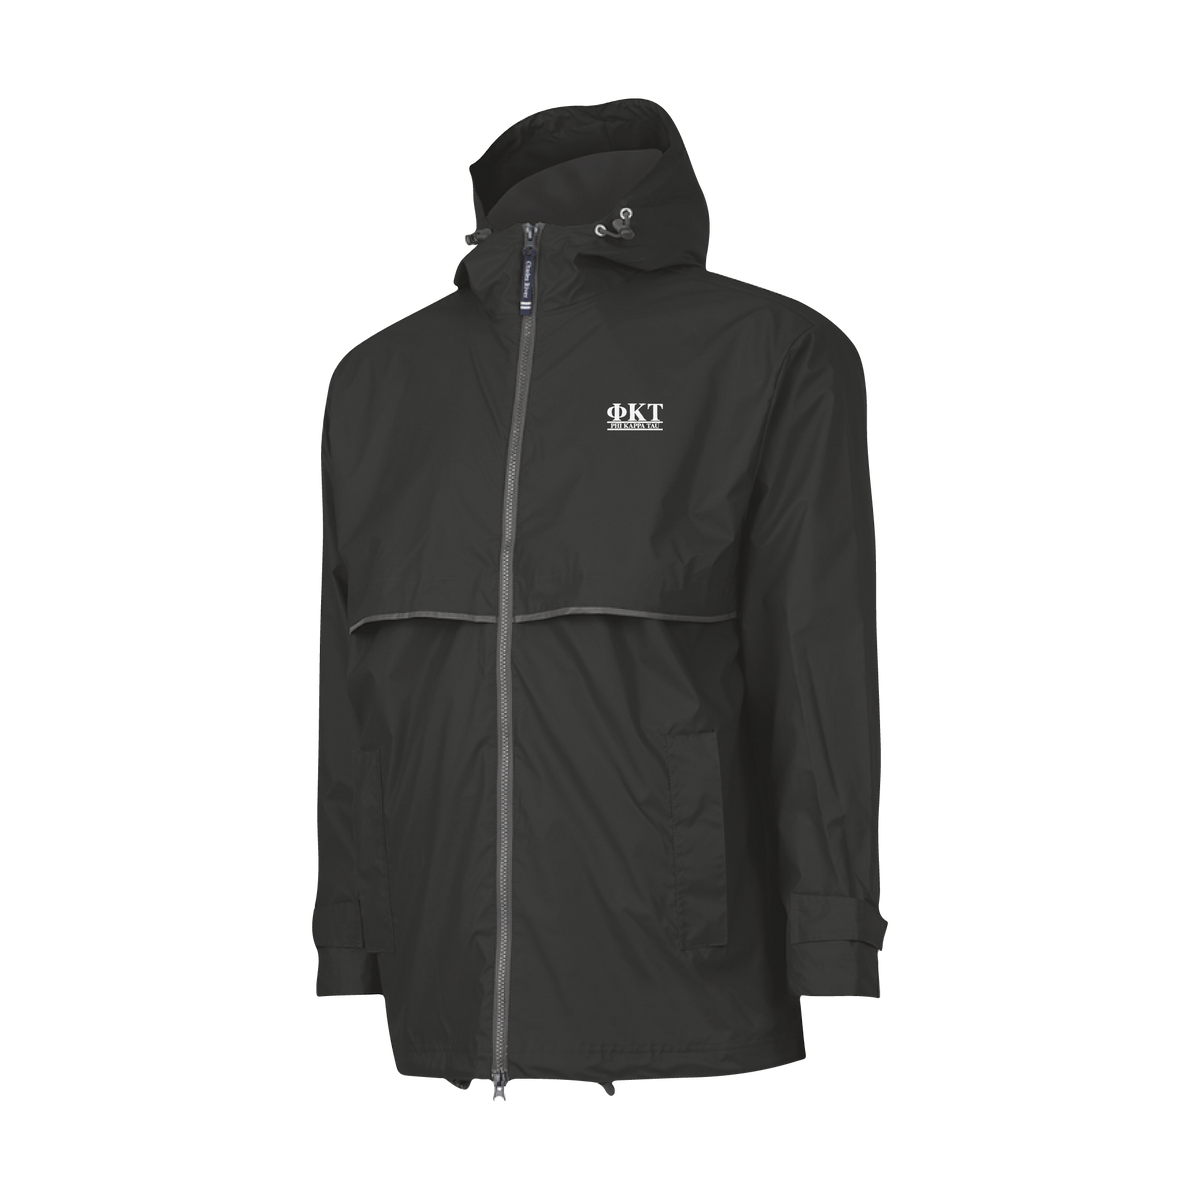 B-Unlimited Greek - Rain Jacket (PKT) - Charles River - 9199 - New Englander Rain Jacket - Black